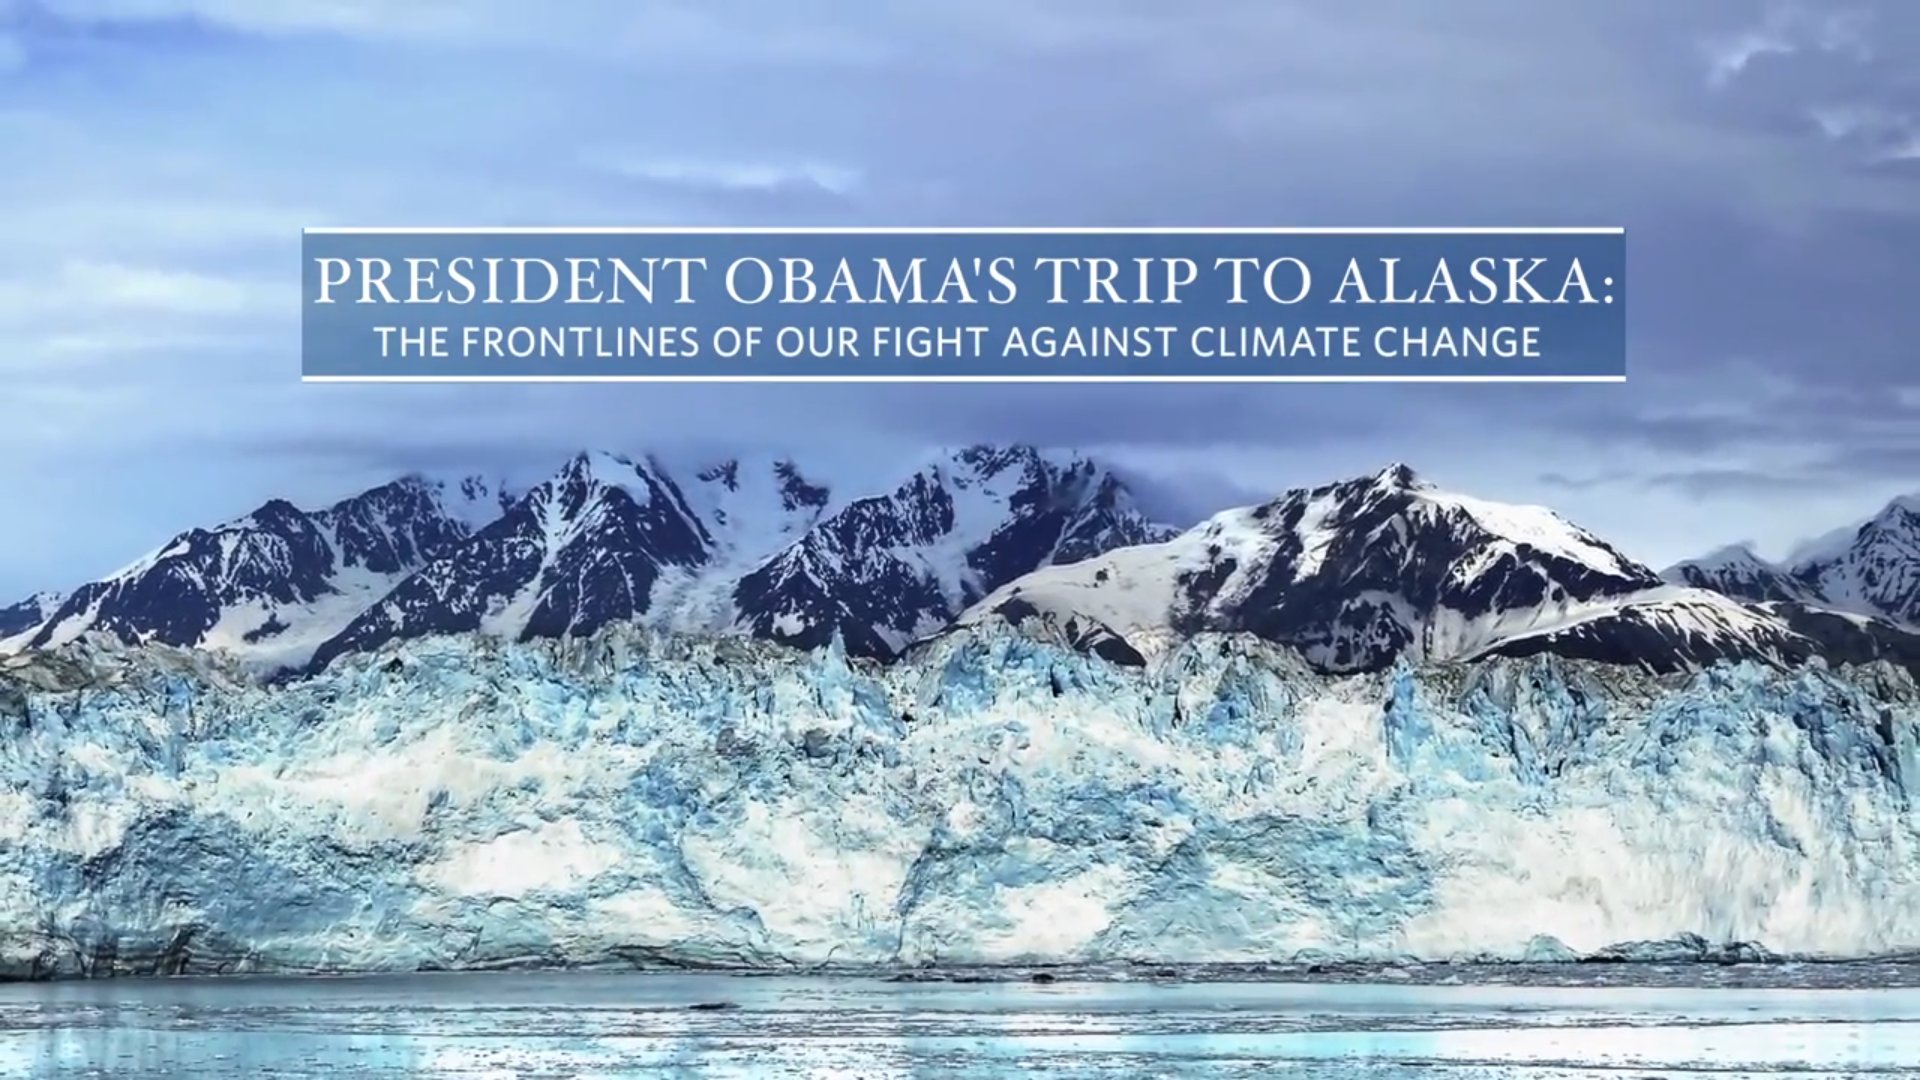 President Obama to visit Arctic